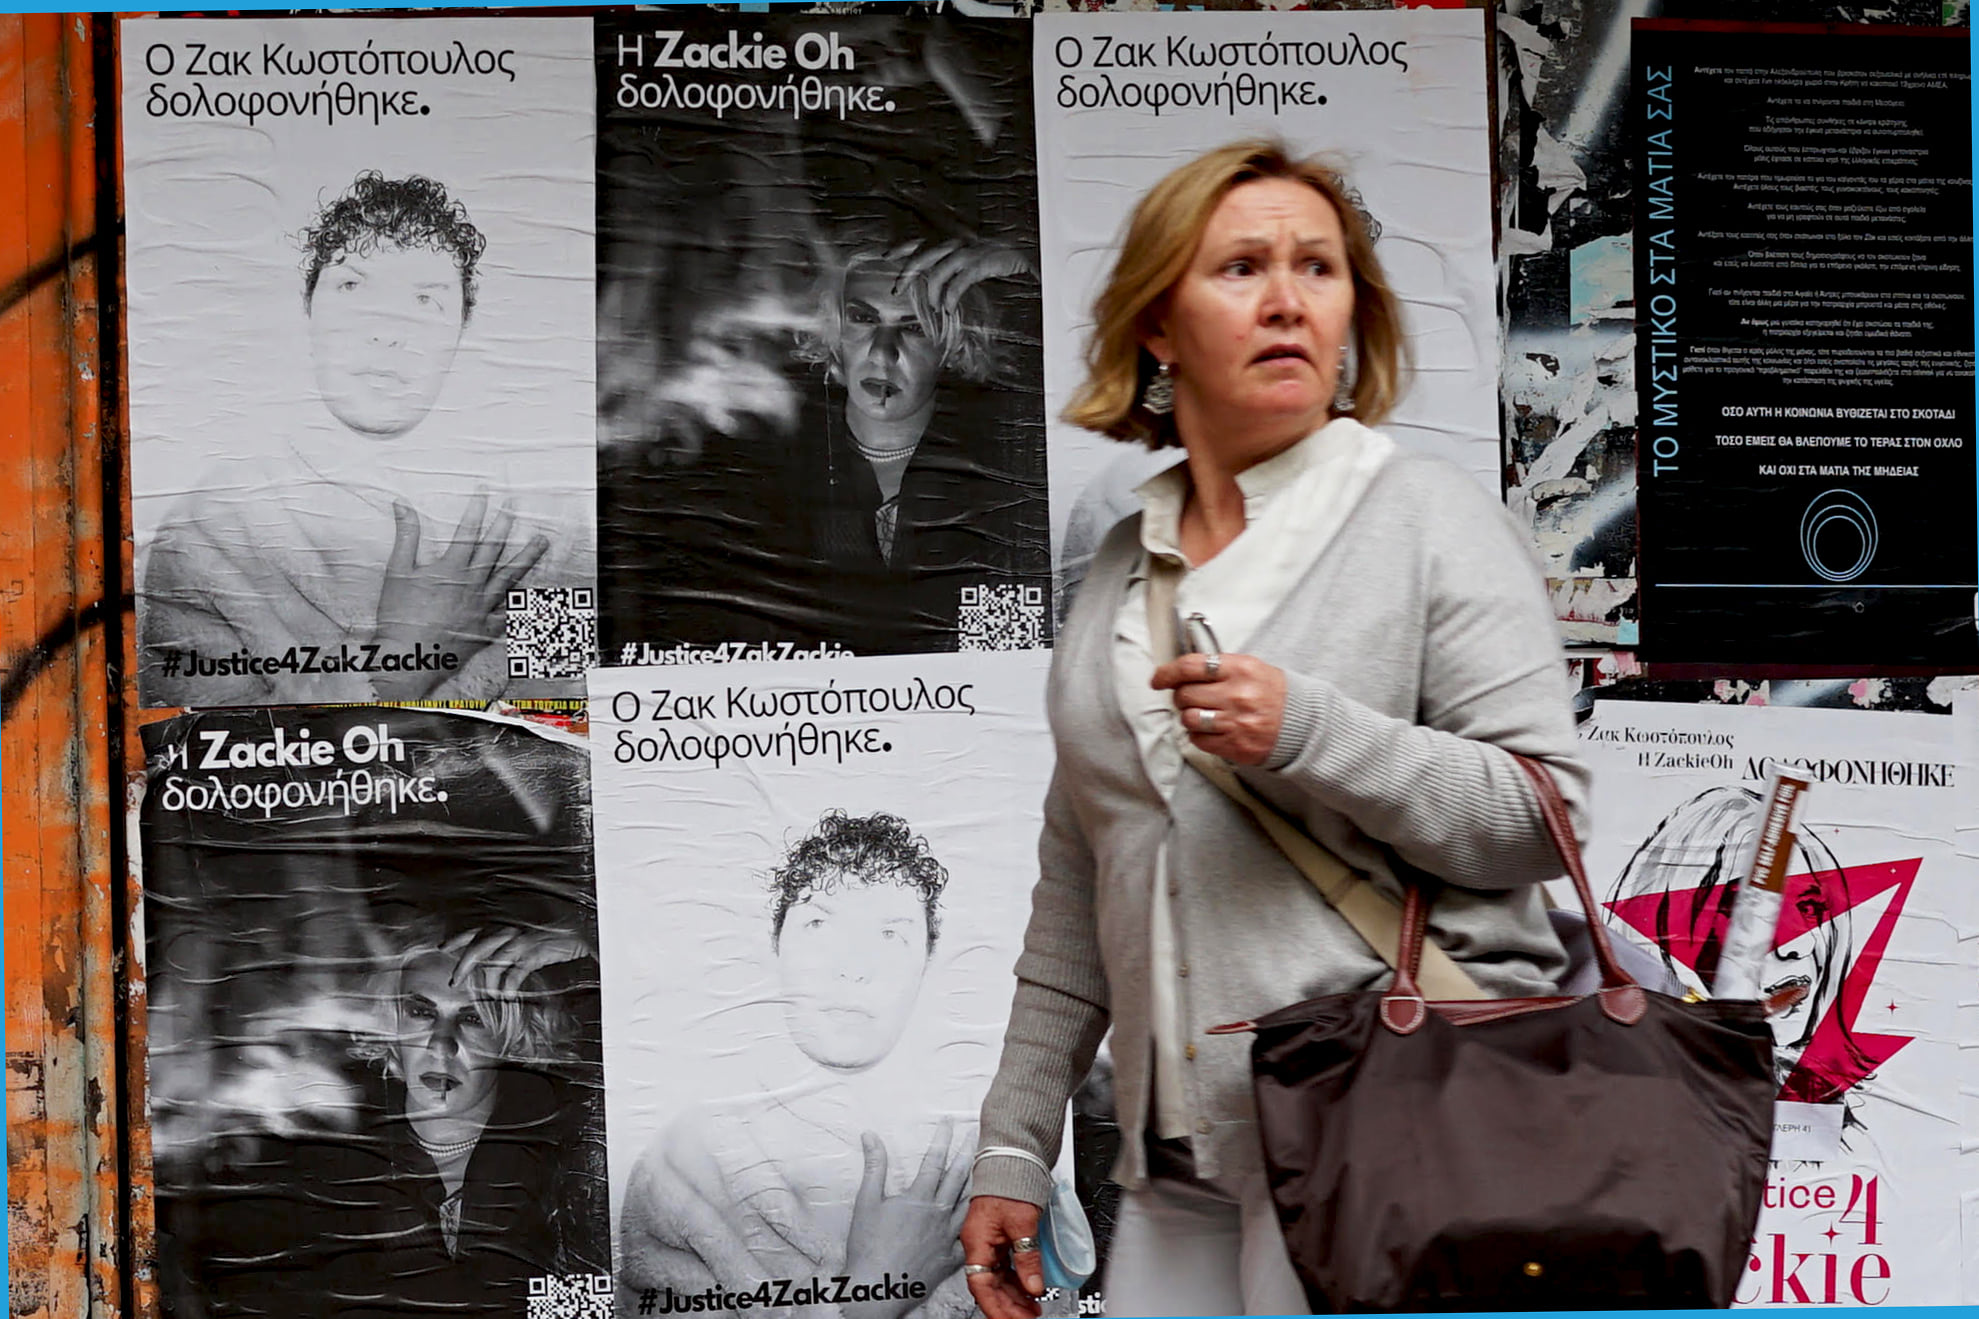 Featured image for “Ενόψει της δικαστικής απόφασης: Πανελλαδική Ημέρα Δράσης για τον Ζακ Κωστόπουλο”